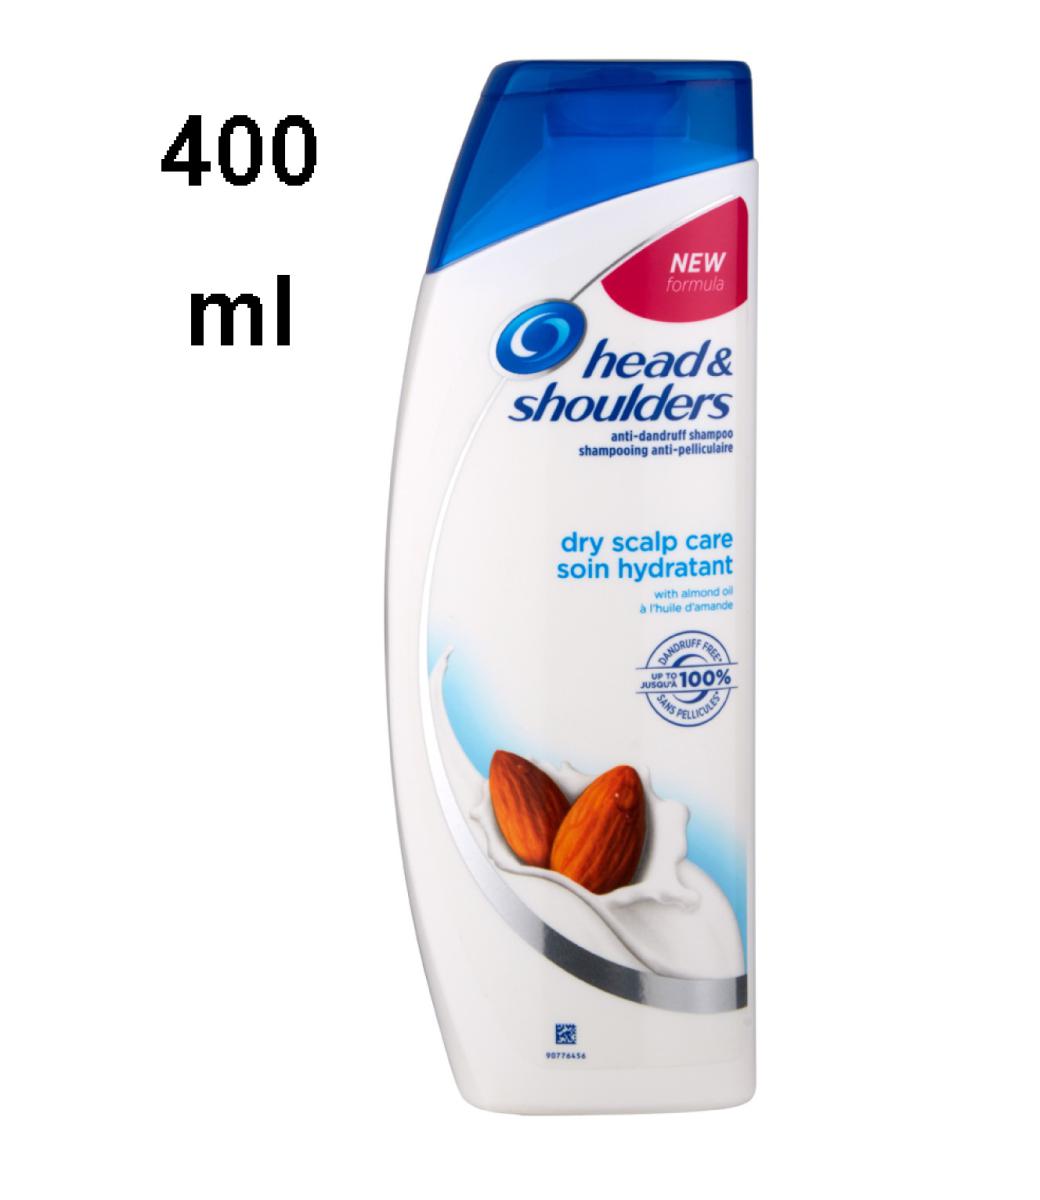 Head Shoulders Anti Dandruff Shampoo Dry Scalp Care Mit Mandelol 400 Ml